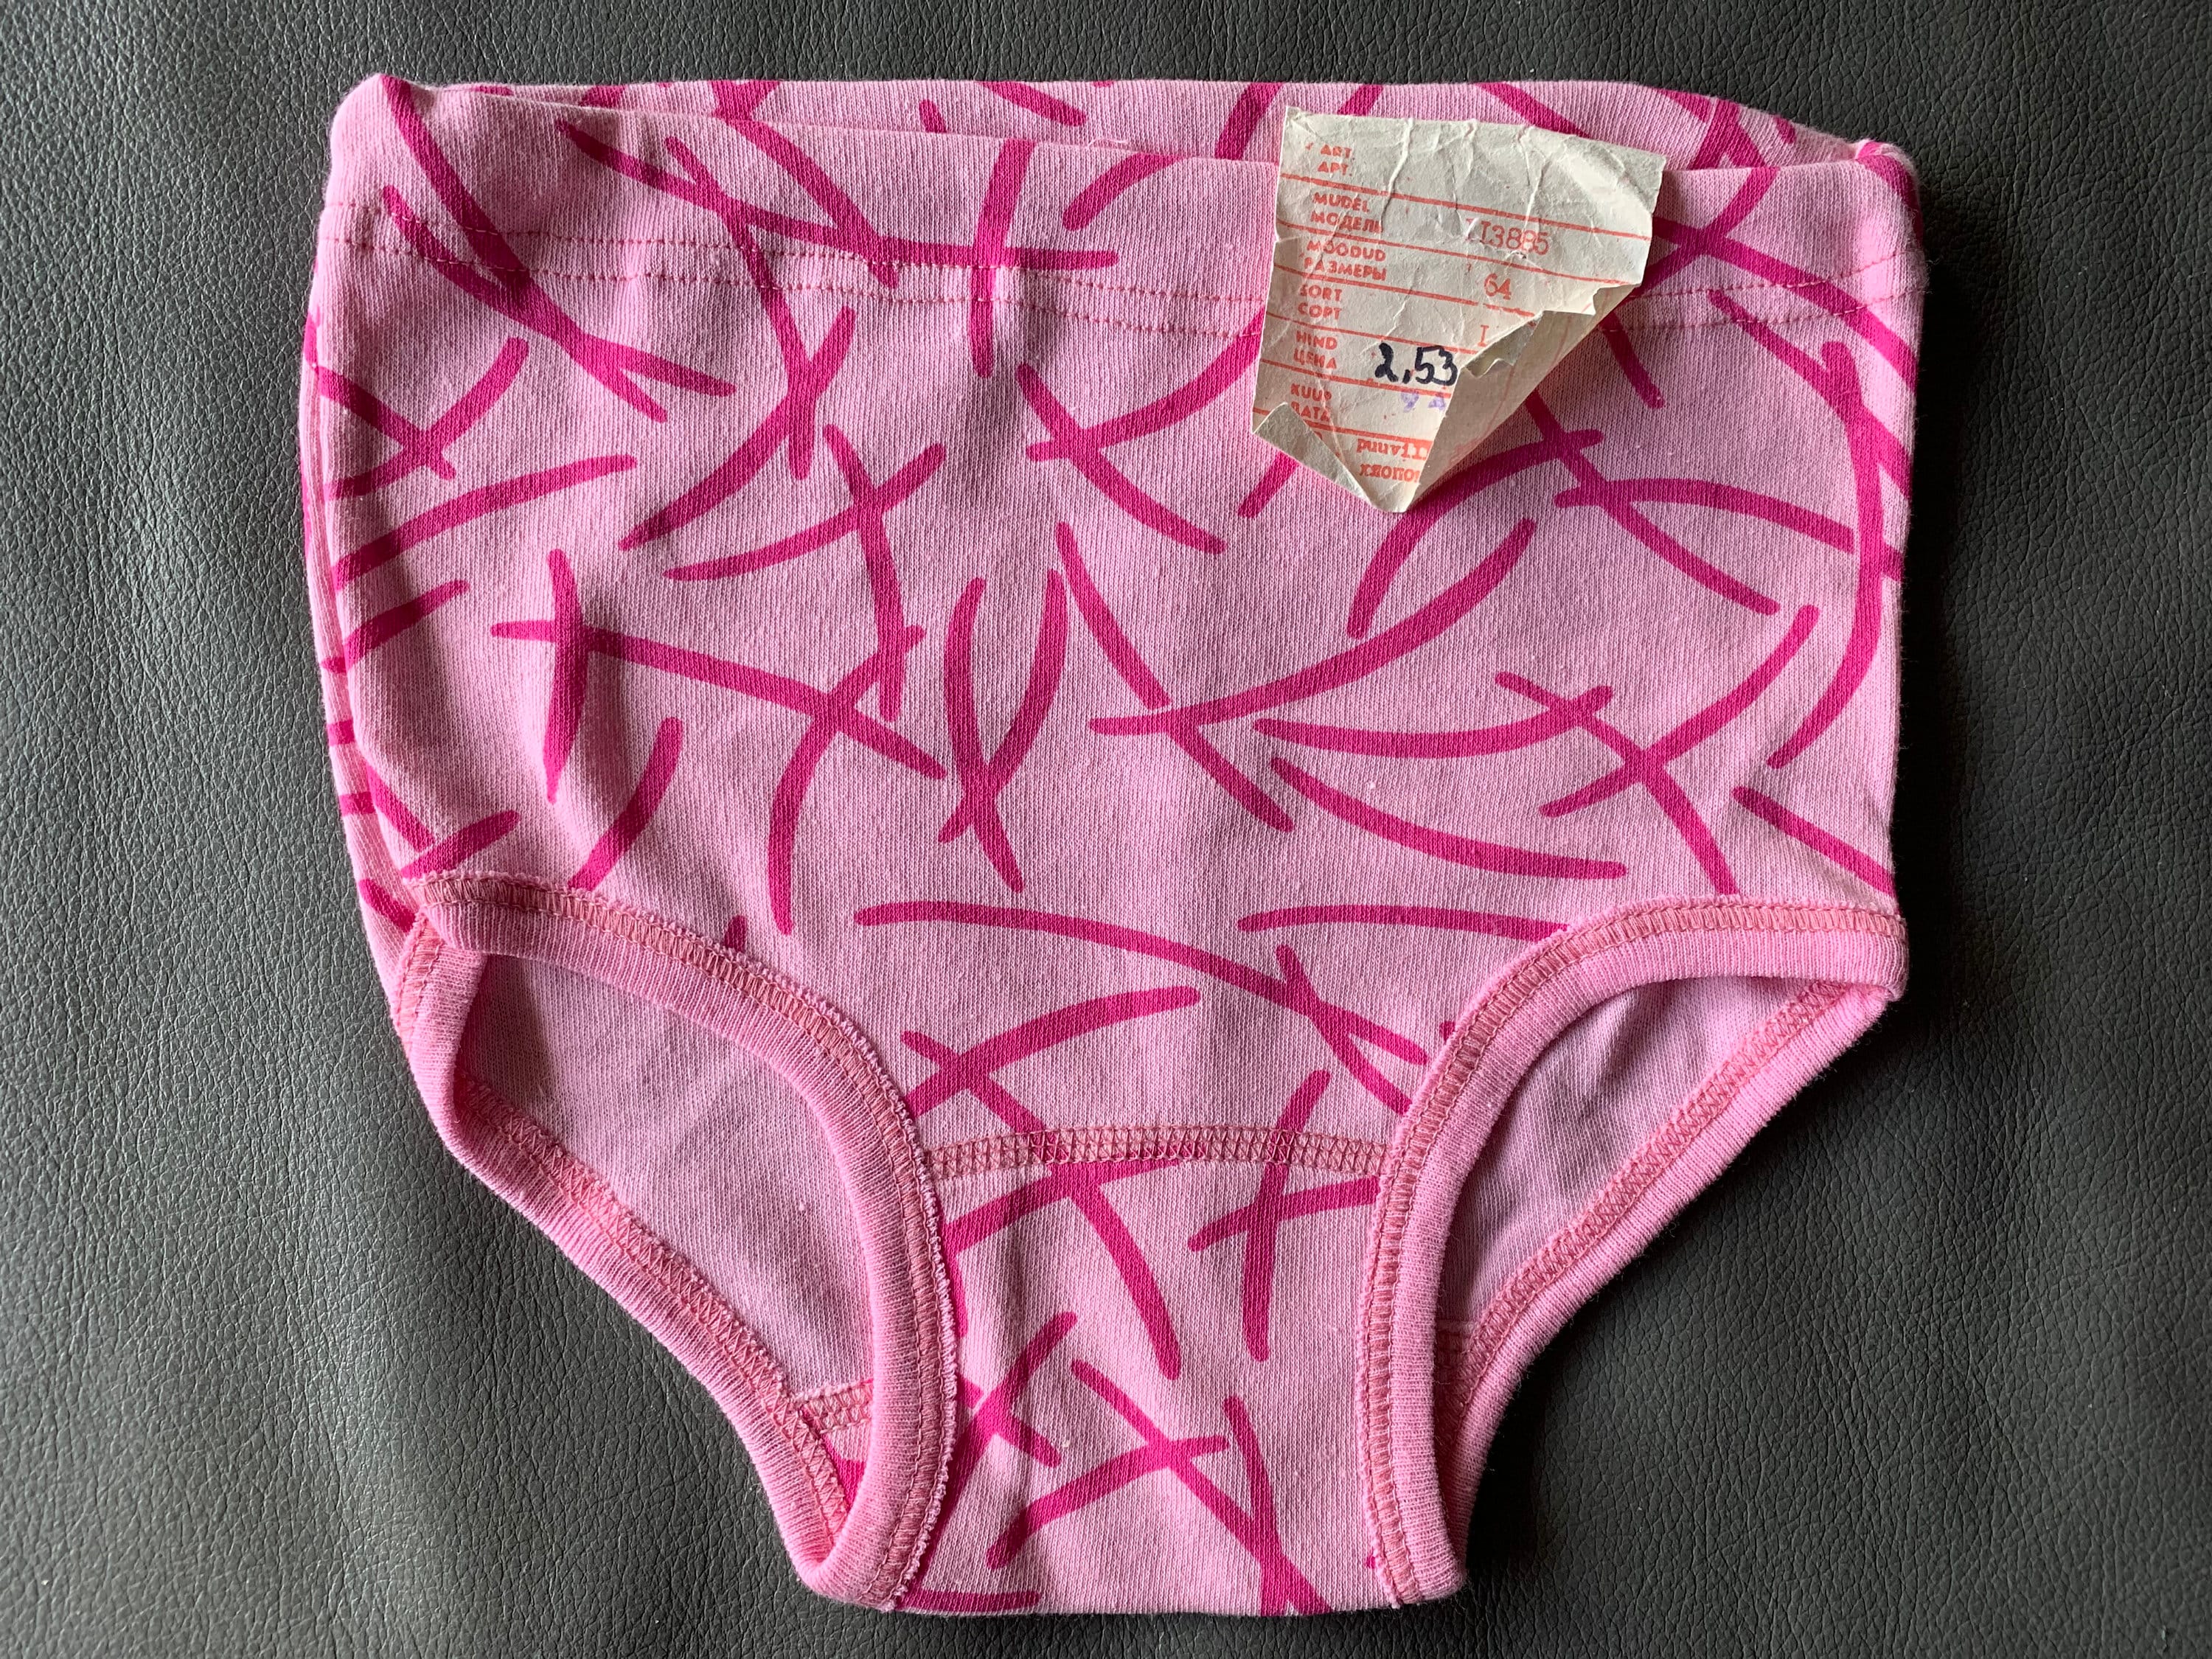 Trans Women's Underwear & Panties - CafePress